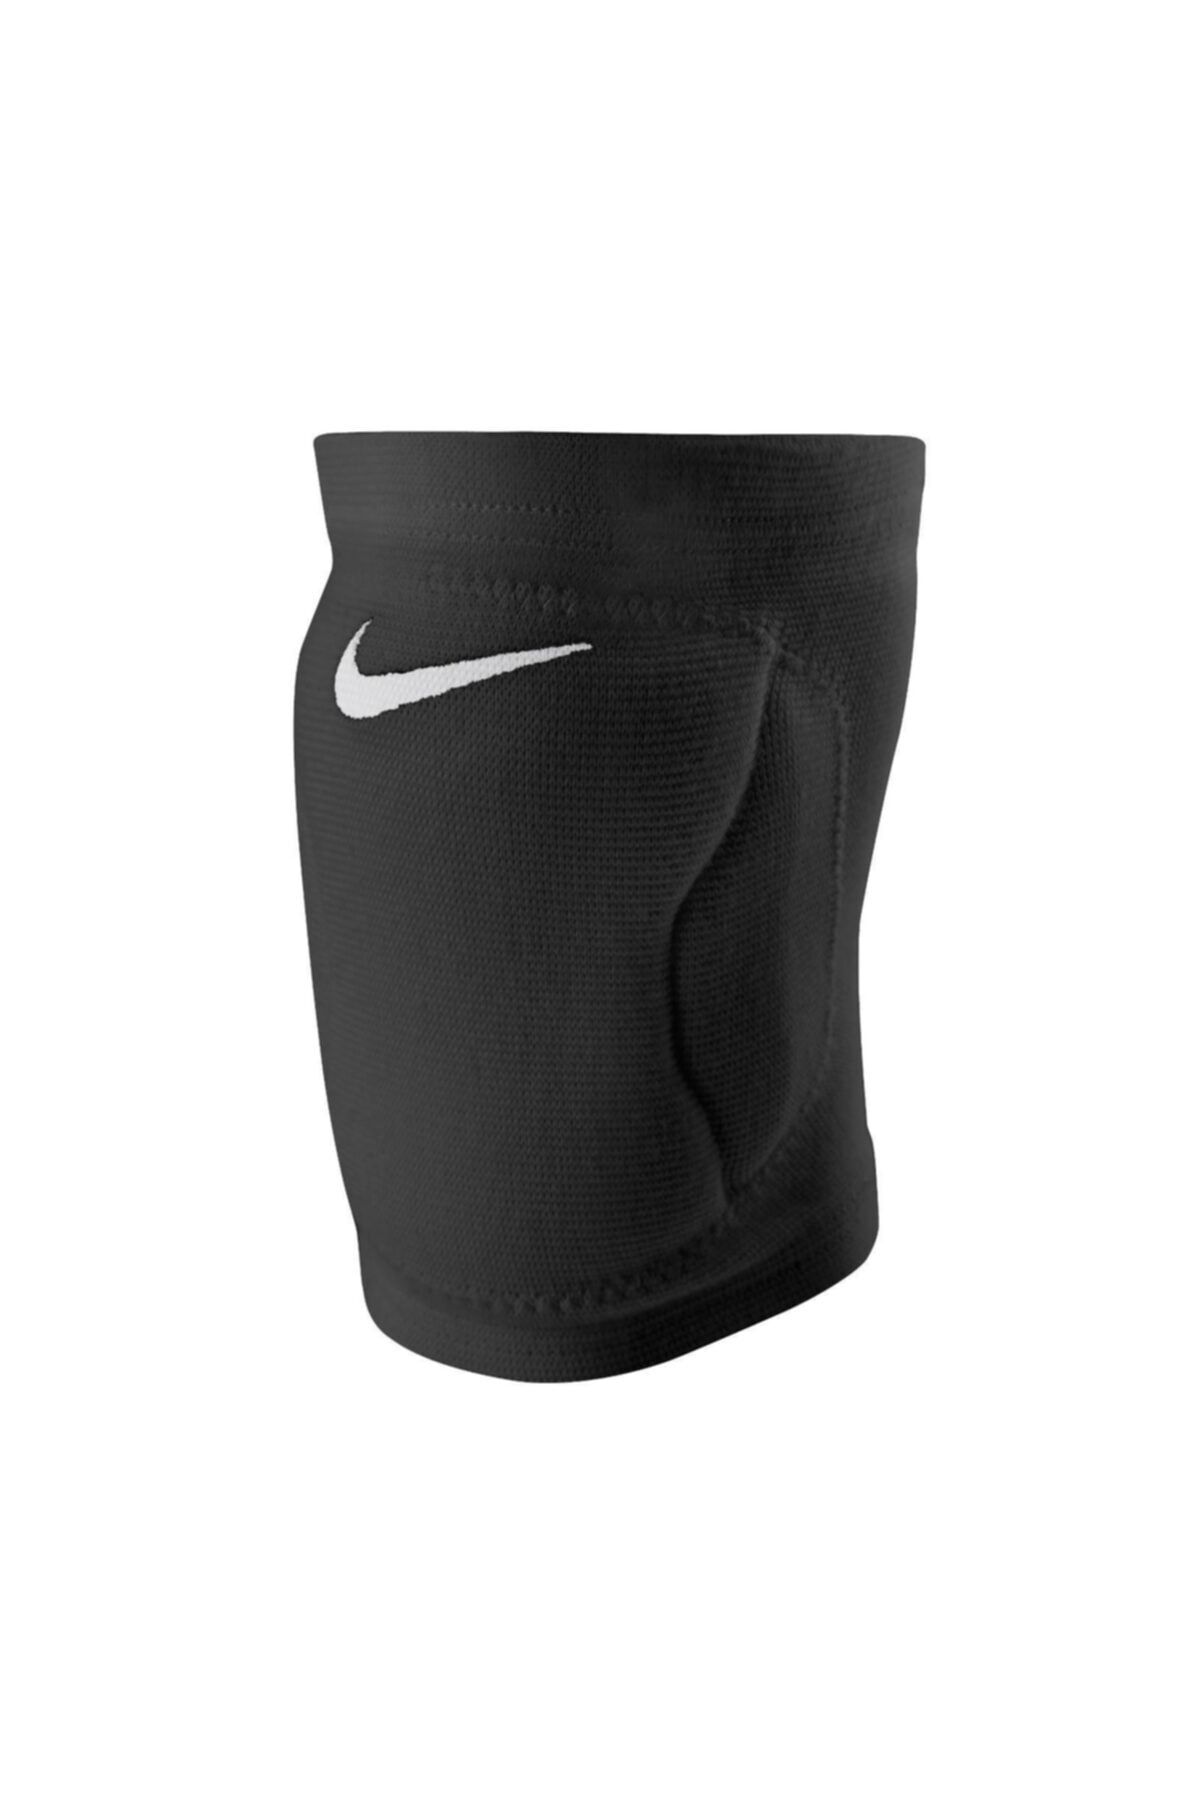 Nike N.vp.05.001.ml Streak Volleyball Knee Pad Voleybol Dizlik